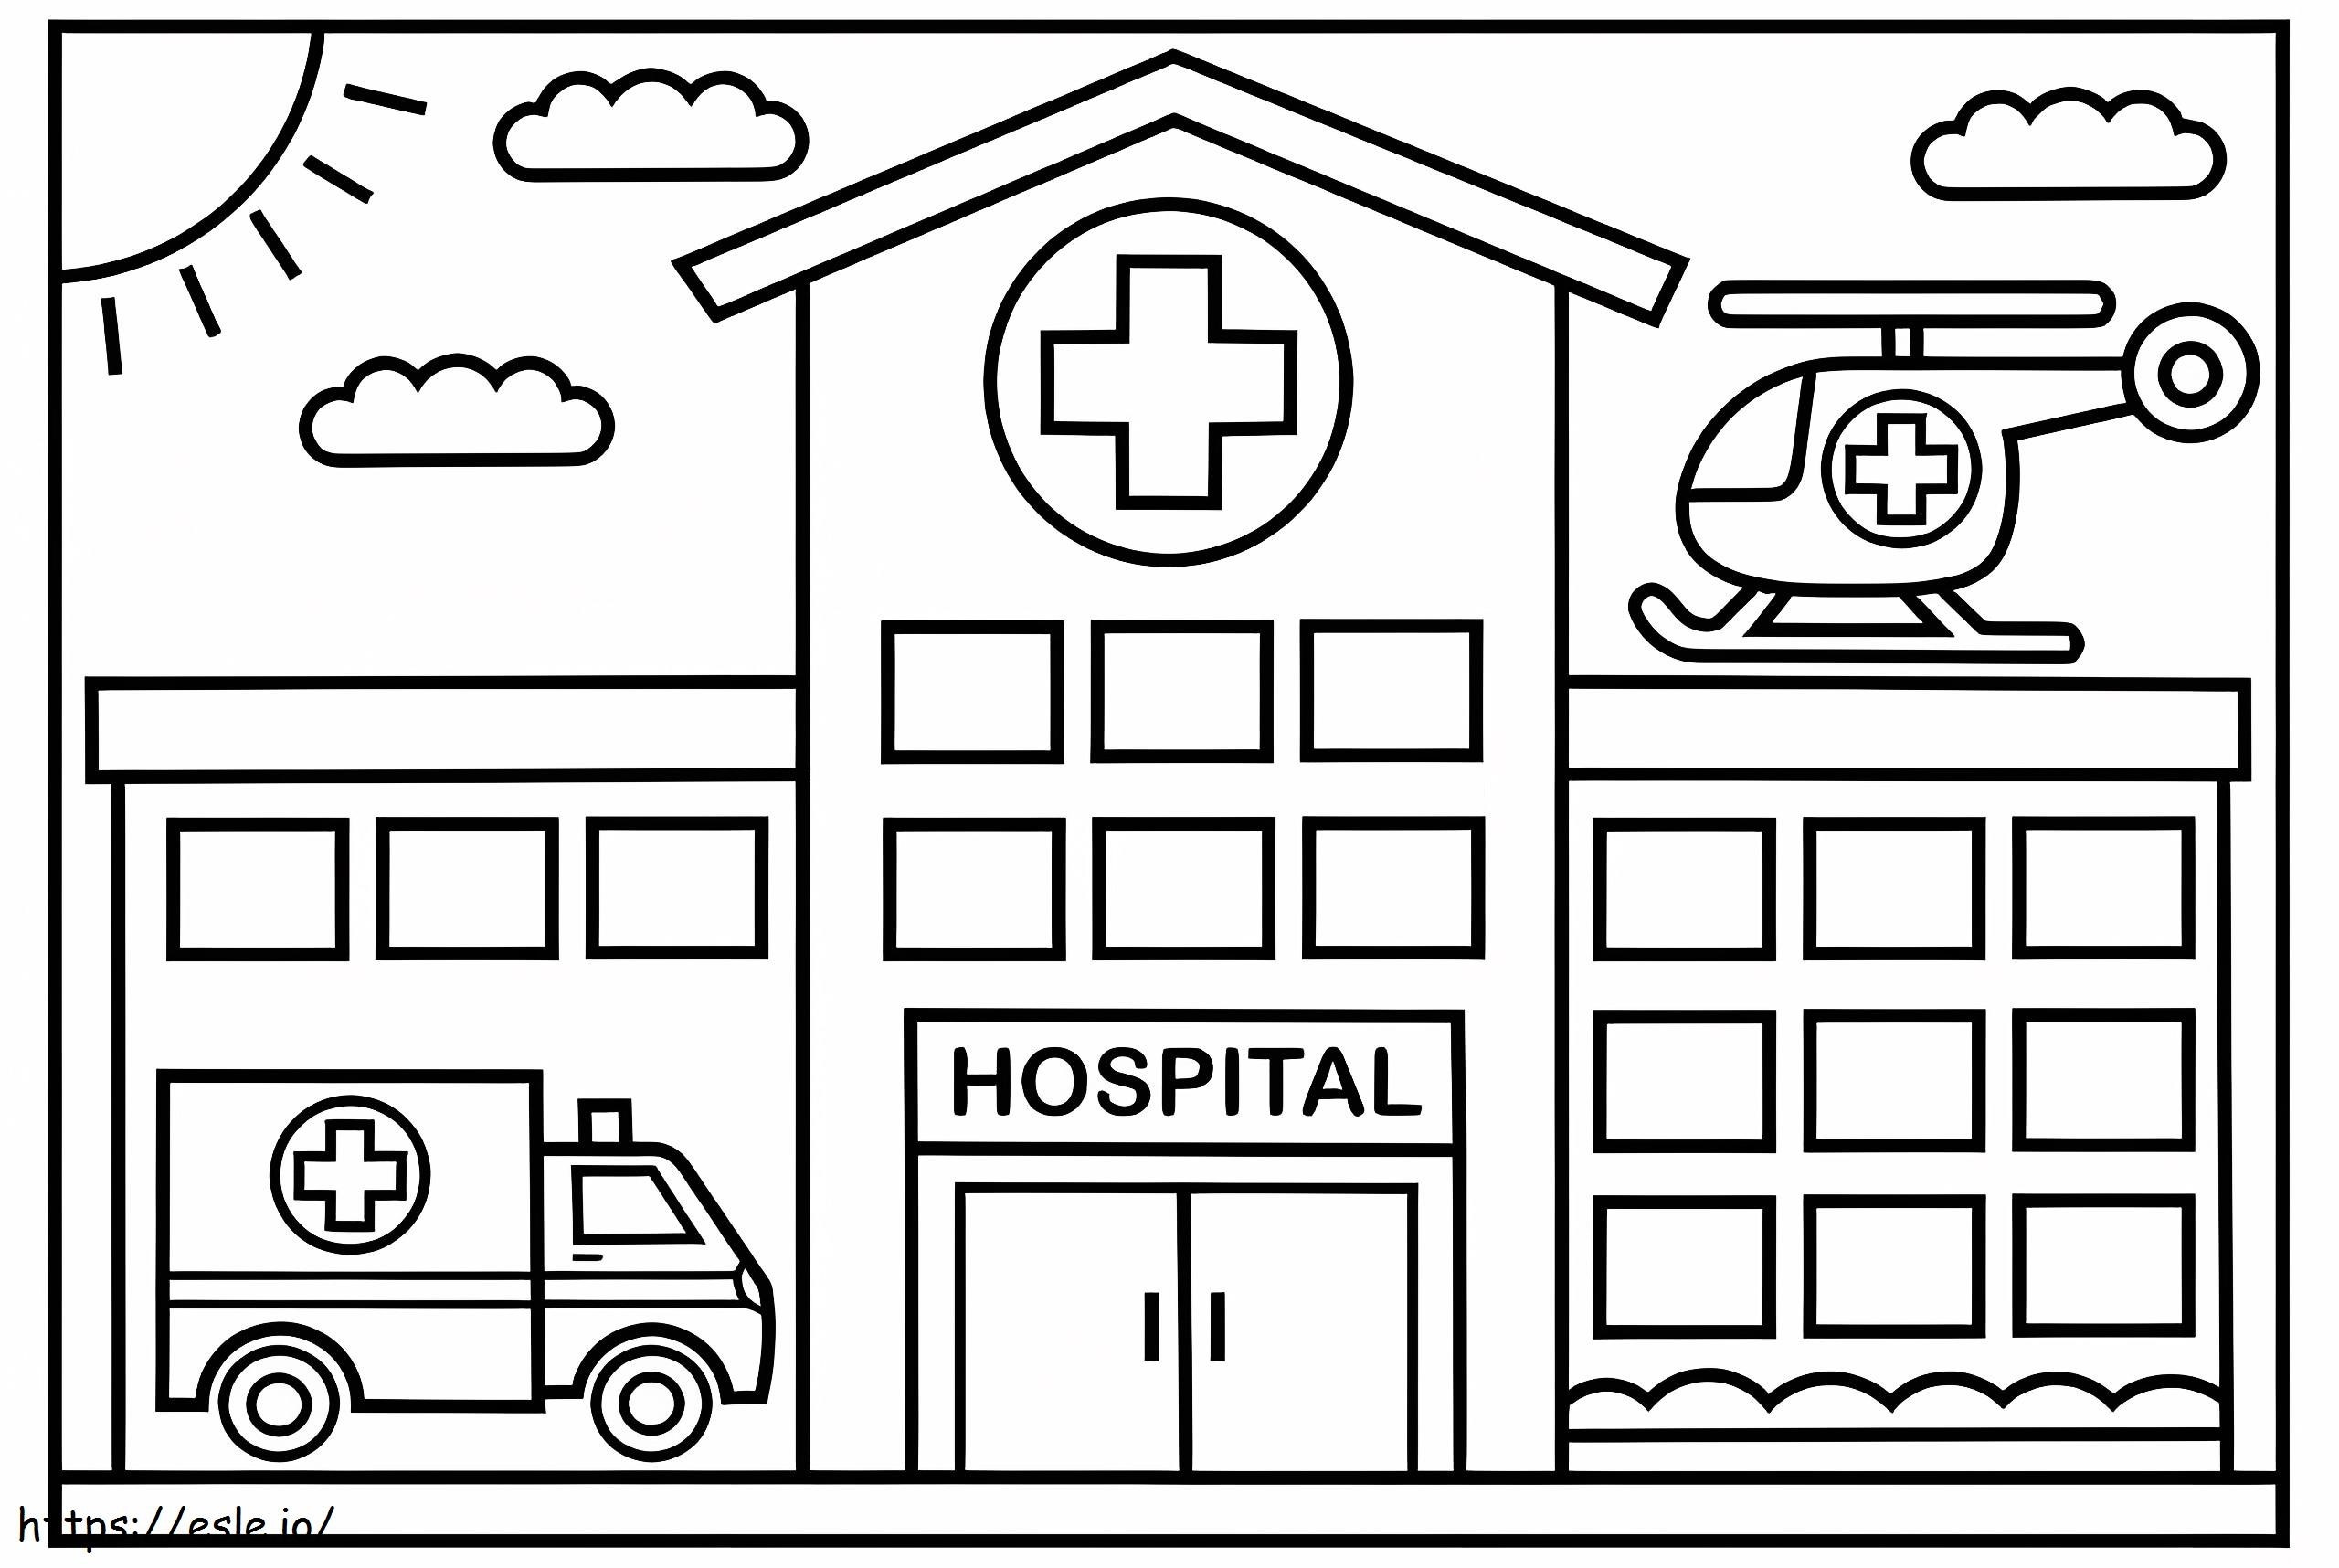 Printable Hospital coloring page